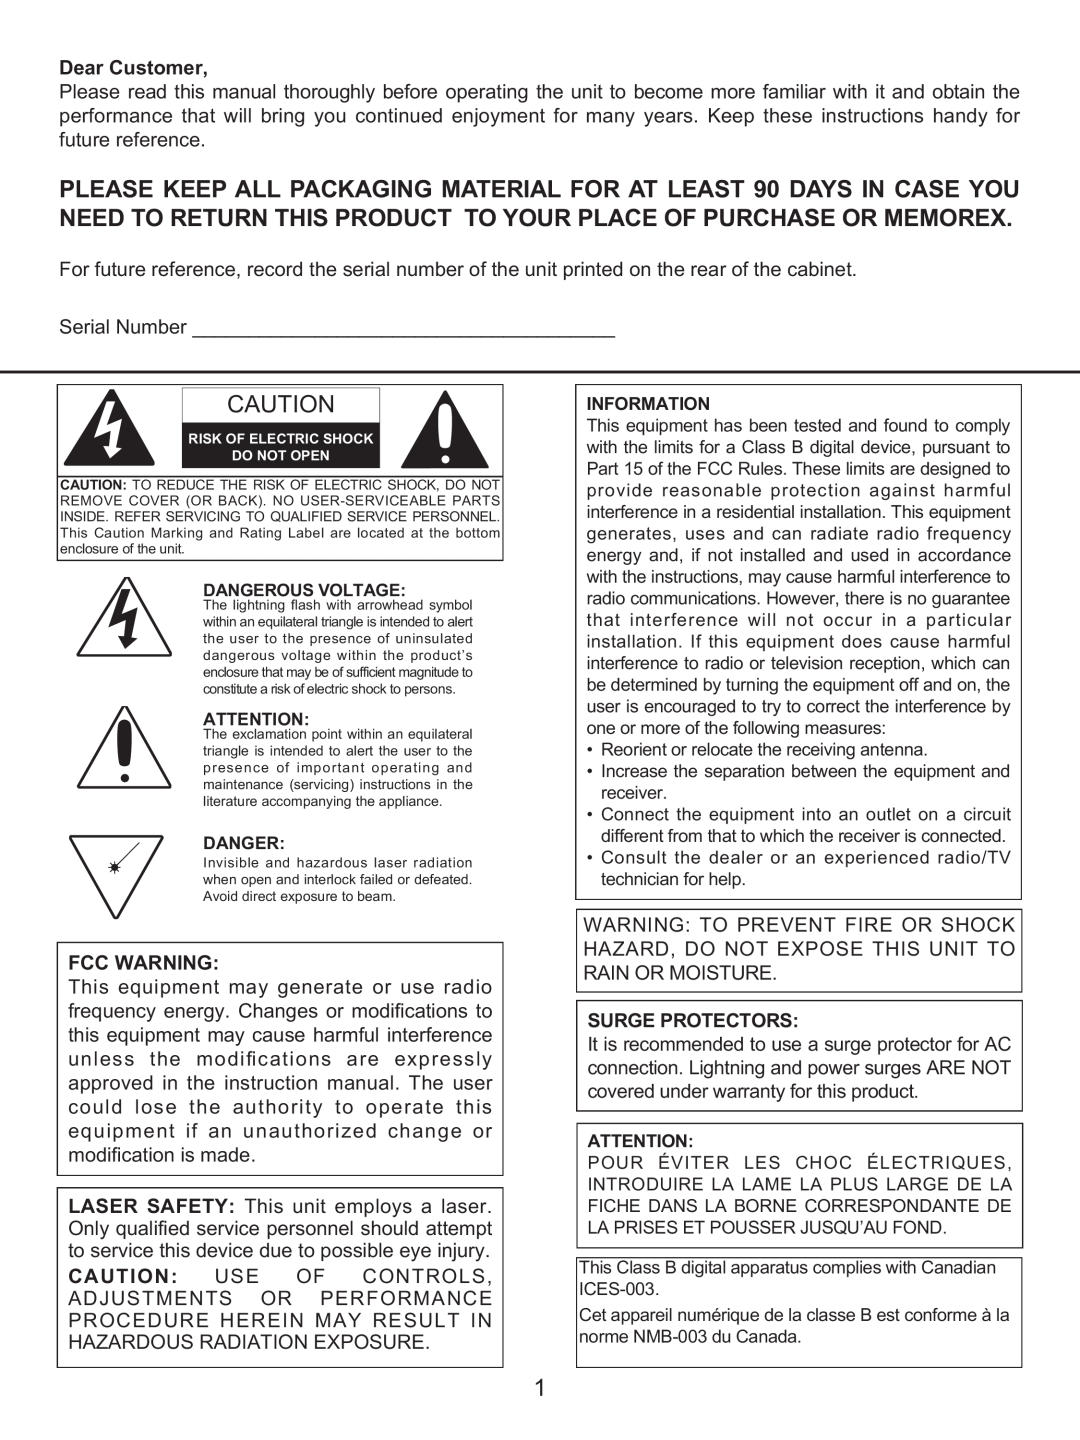 Memorex MKS8590 manual Fcc Warning, Surge Protectors, Dangerous Voltage, Information 